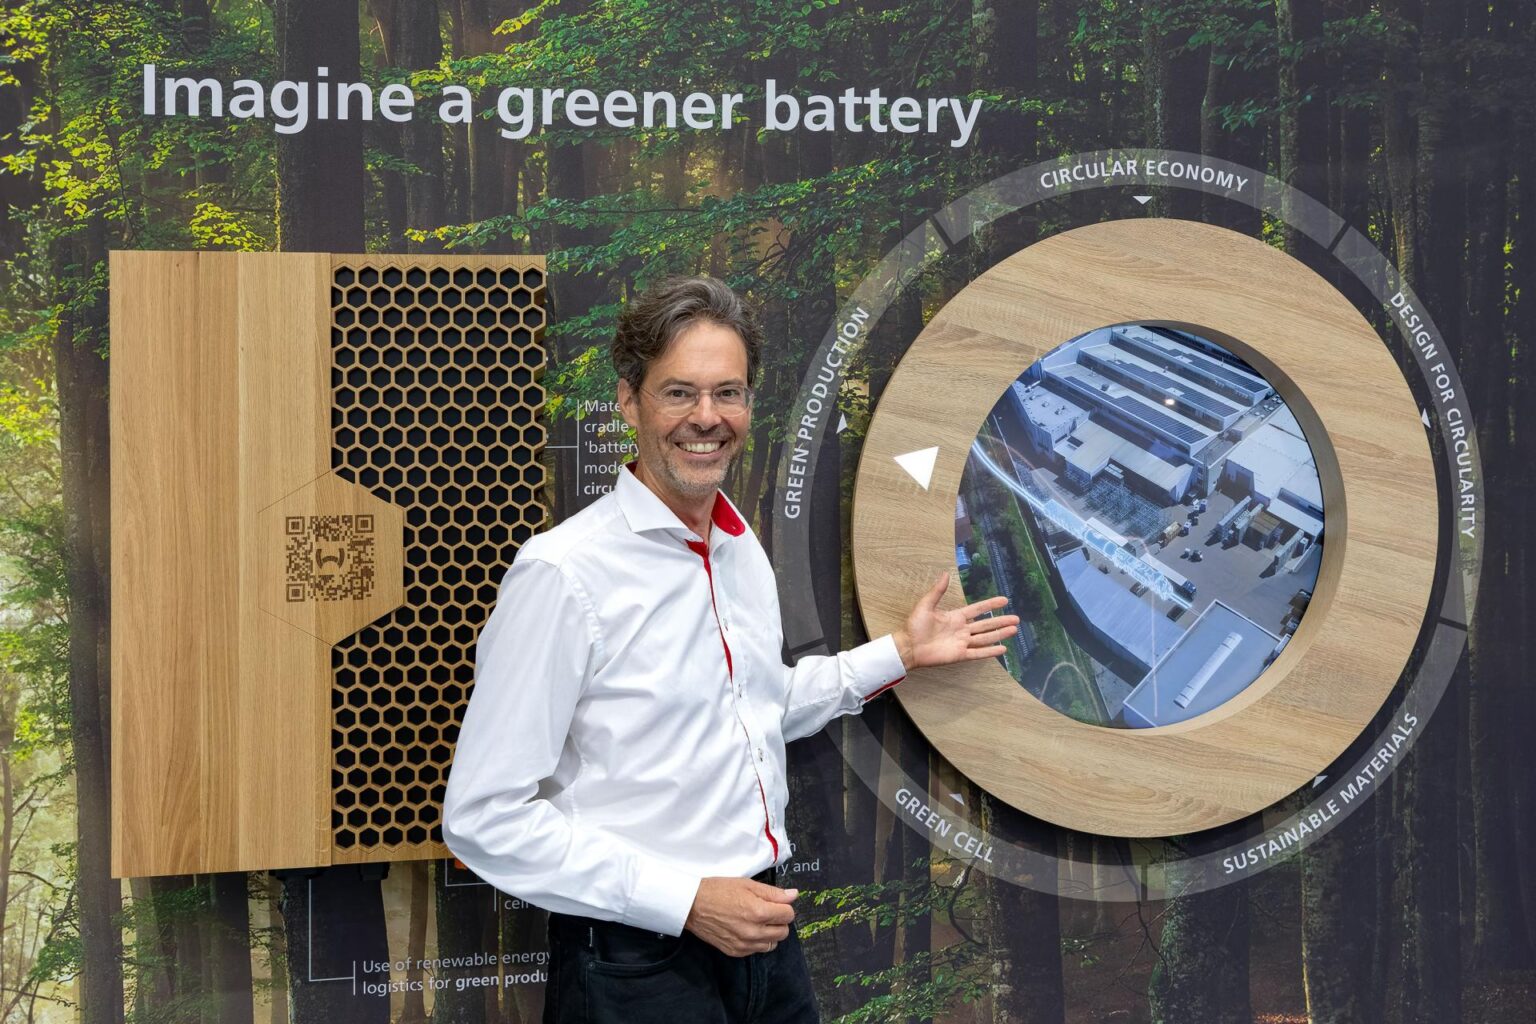 Webasto lüftet Geheimnis der "grünen Batterie"